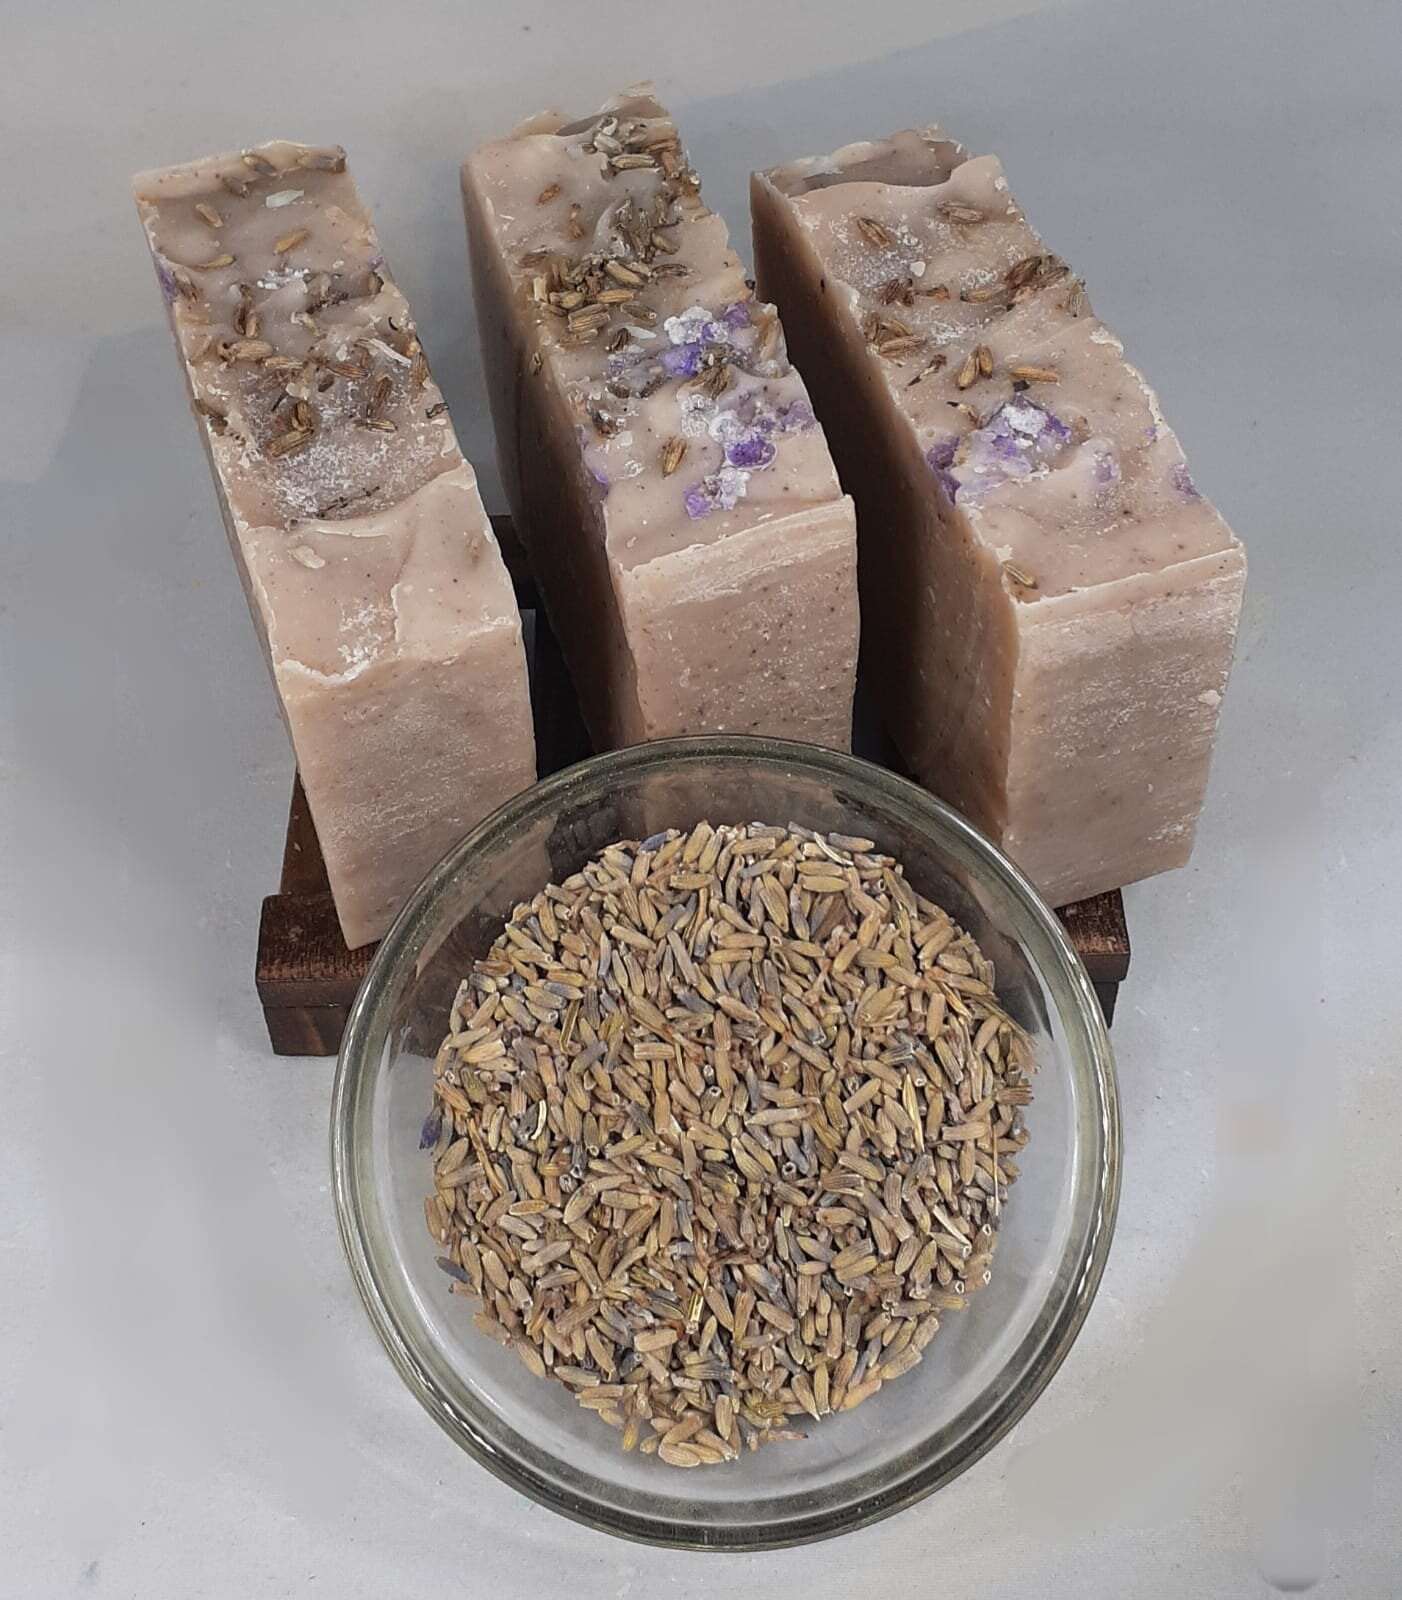 Lavender Lavish - For Eczema